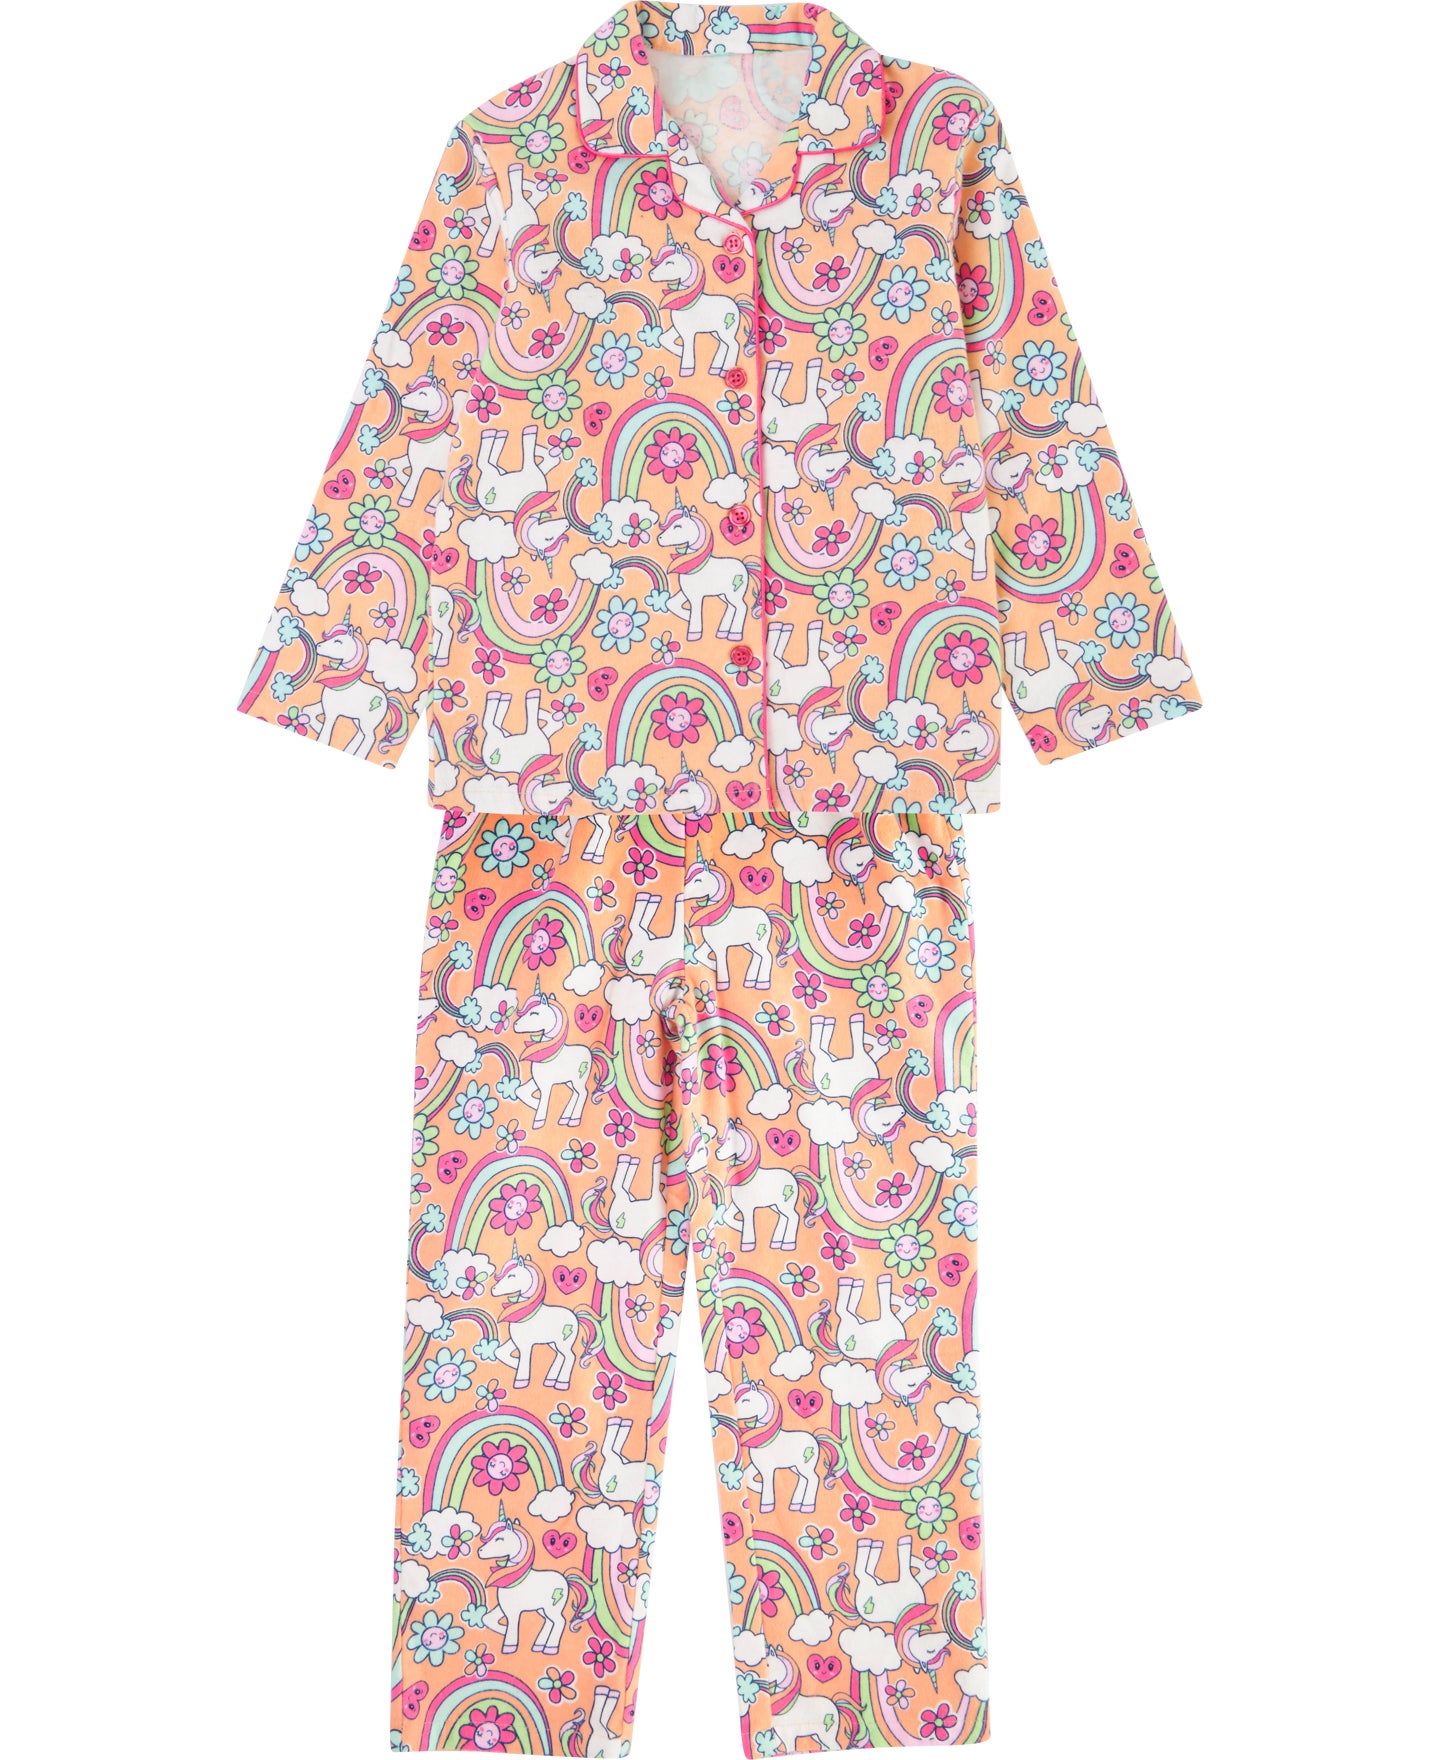 Little Kids' Flannel Pyjamas in Peach Rainbow Unicorn